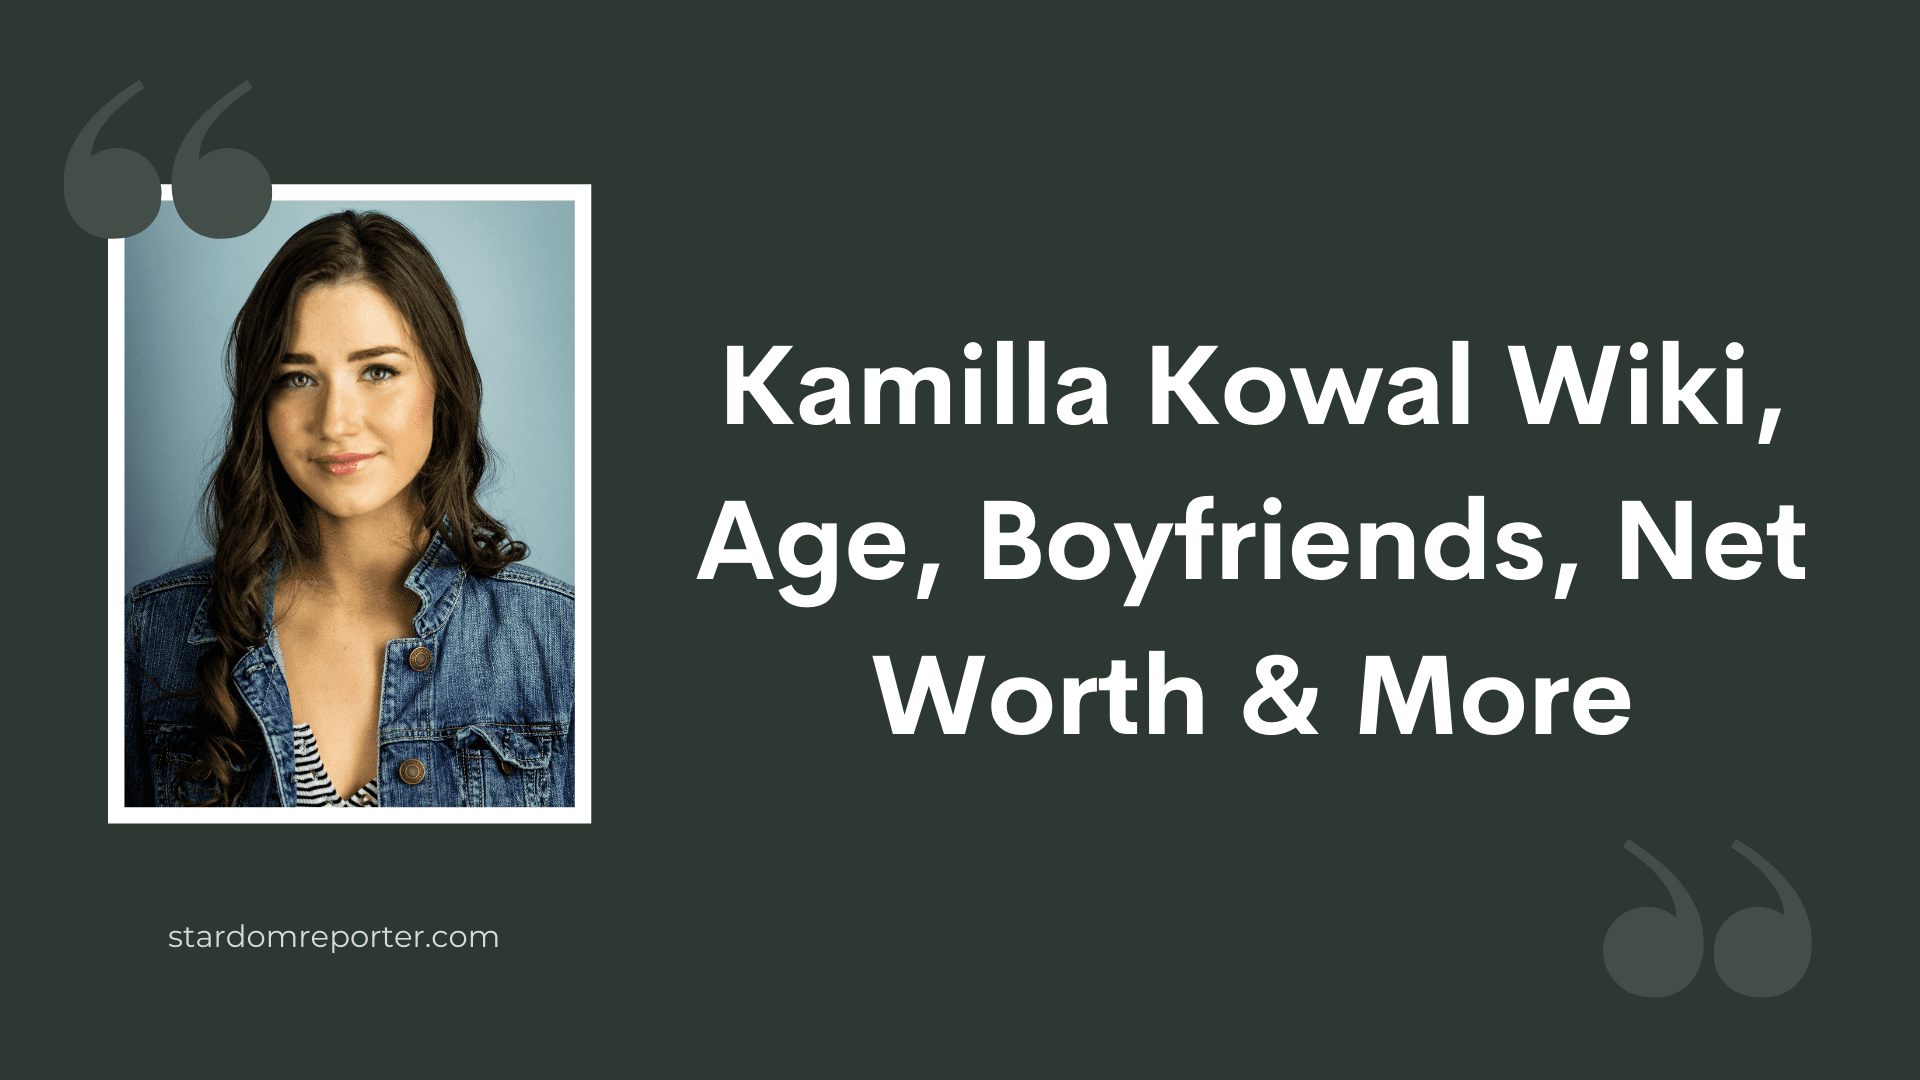 Kamilla Kowal Wiki, Age, Boyfriends, Net Worth & More - 28